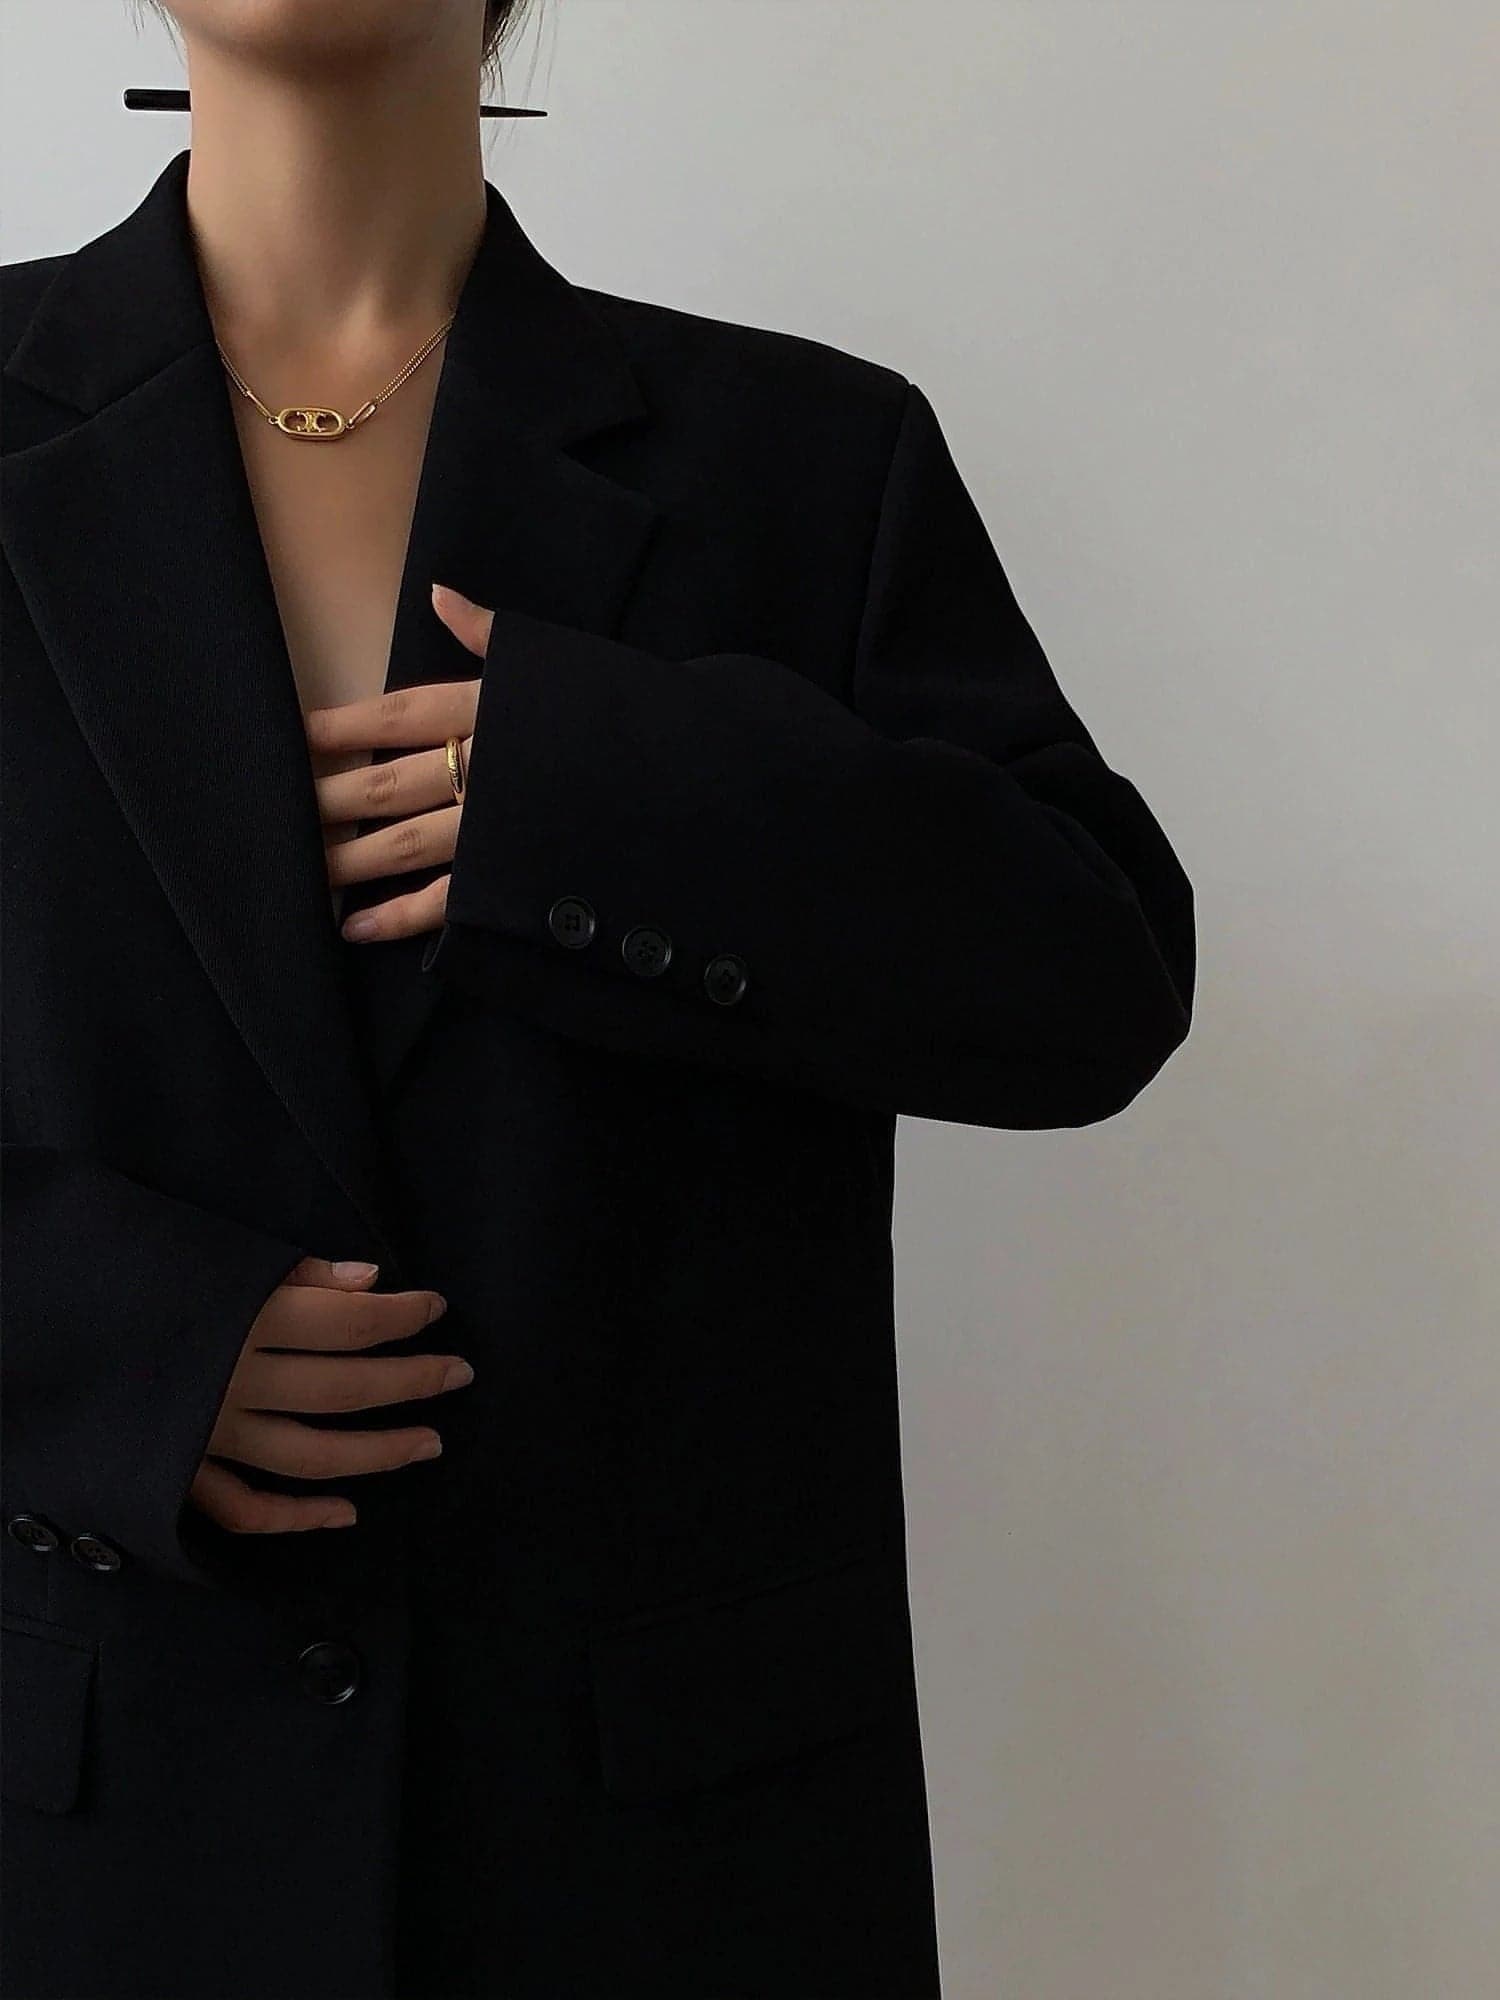 Autumn Collection - Black Loose-Fit Korean Style Blazer - chiclara